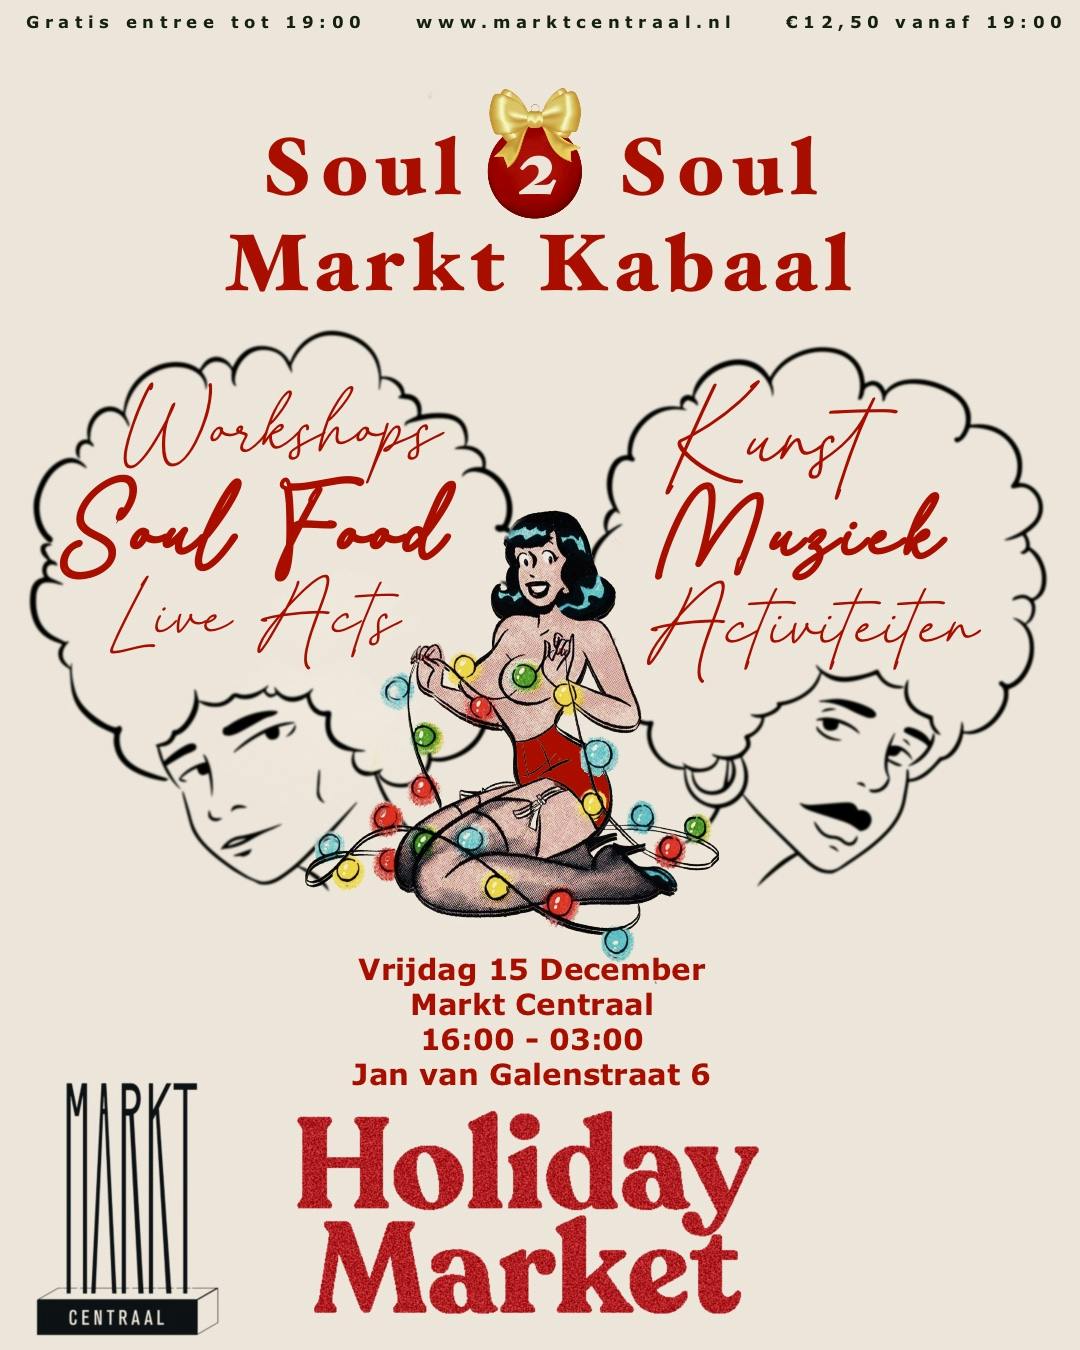 Soul2Soul Chrismas Market Holiday special